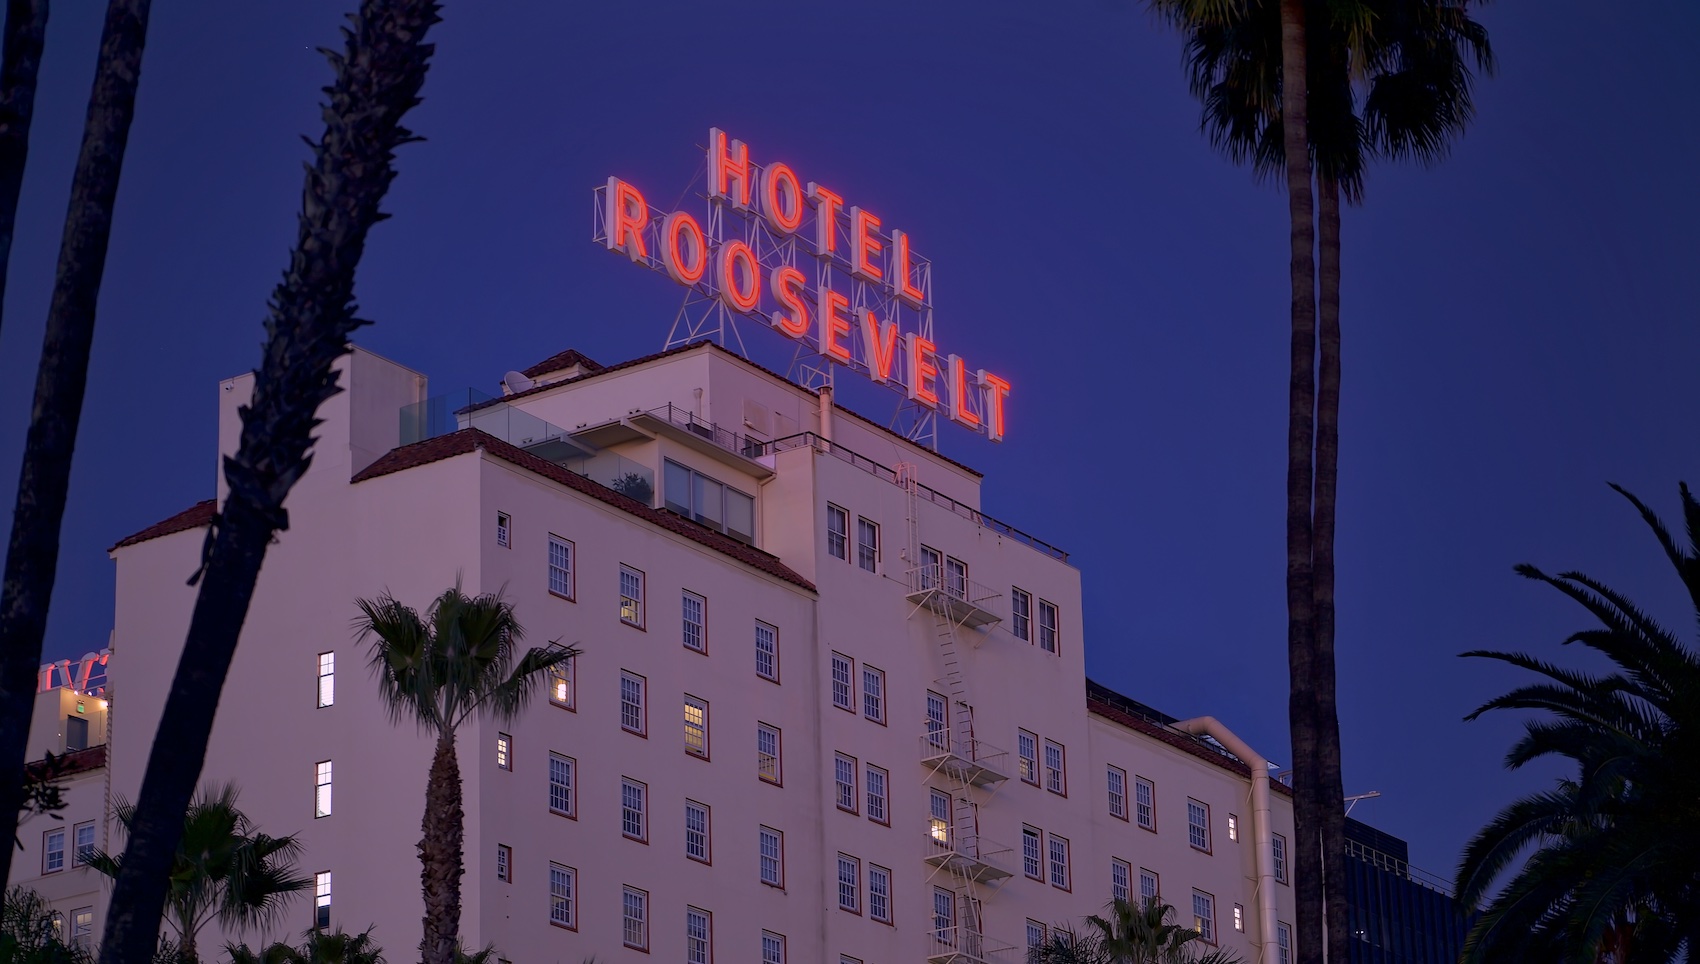 Het Hollywood Roosevelt Hotel Los Angeles